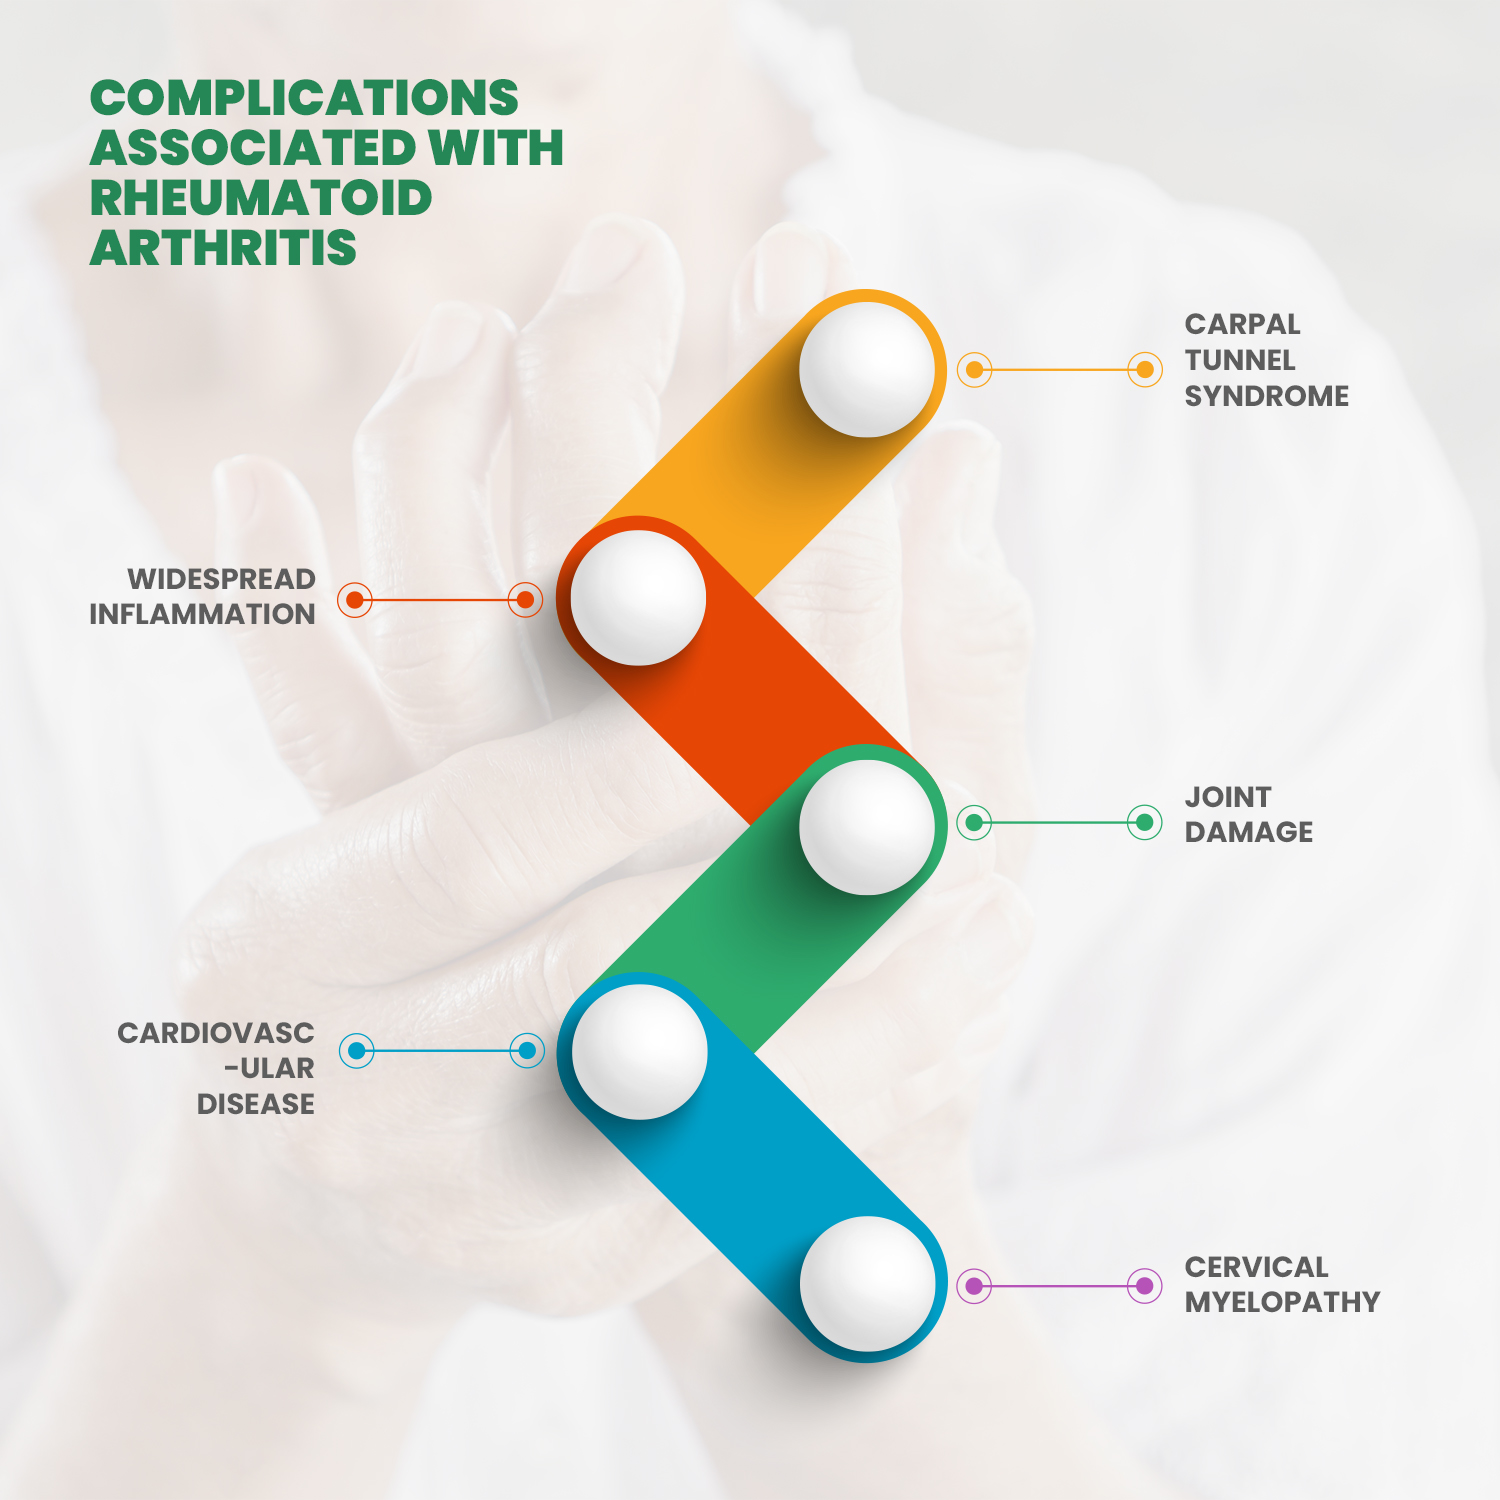 Complications Associated with Rheumatoid Arthritis